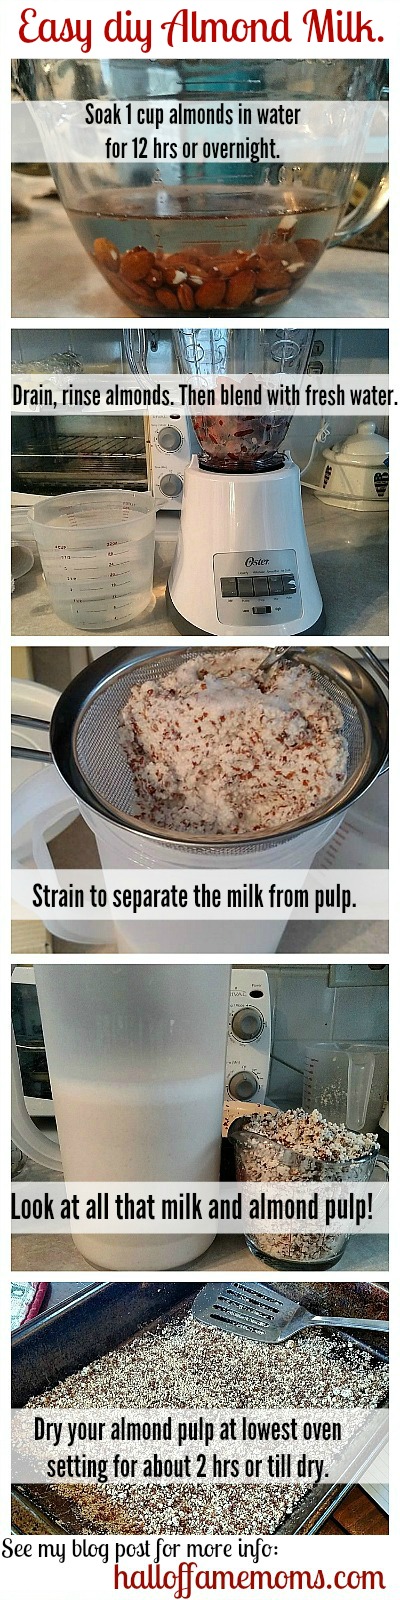 How to make almond milk.